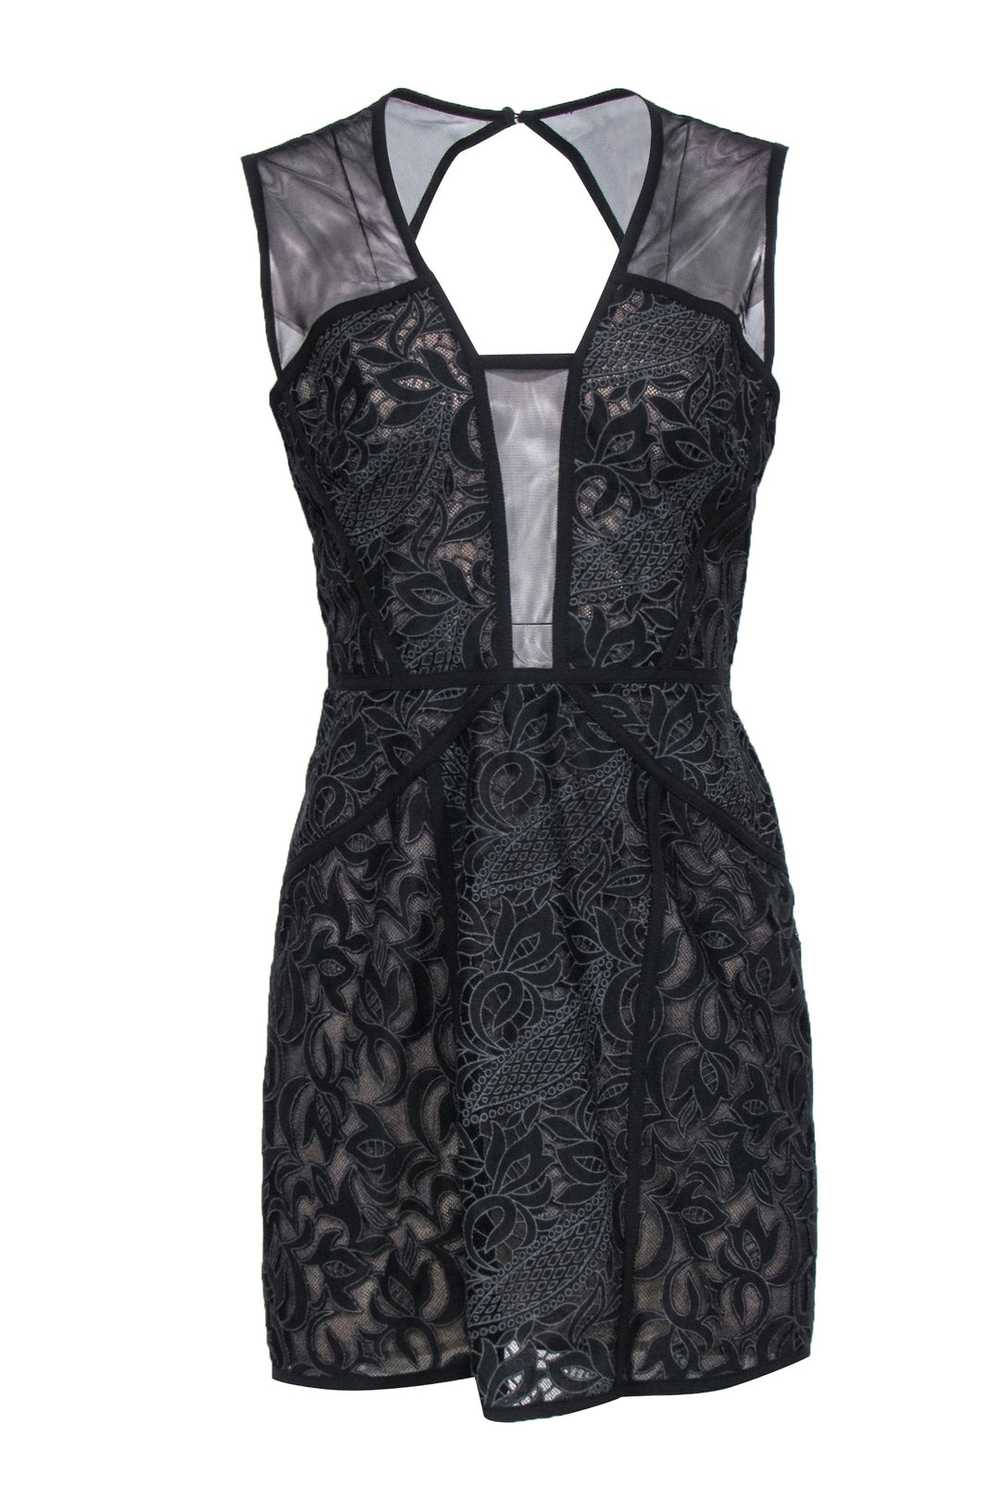 BCBG Max Azria - Black Sheer Lace Mini Dress w/ N… - image 1